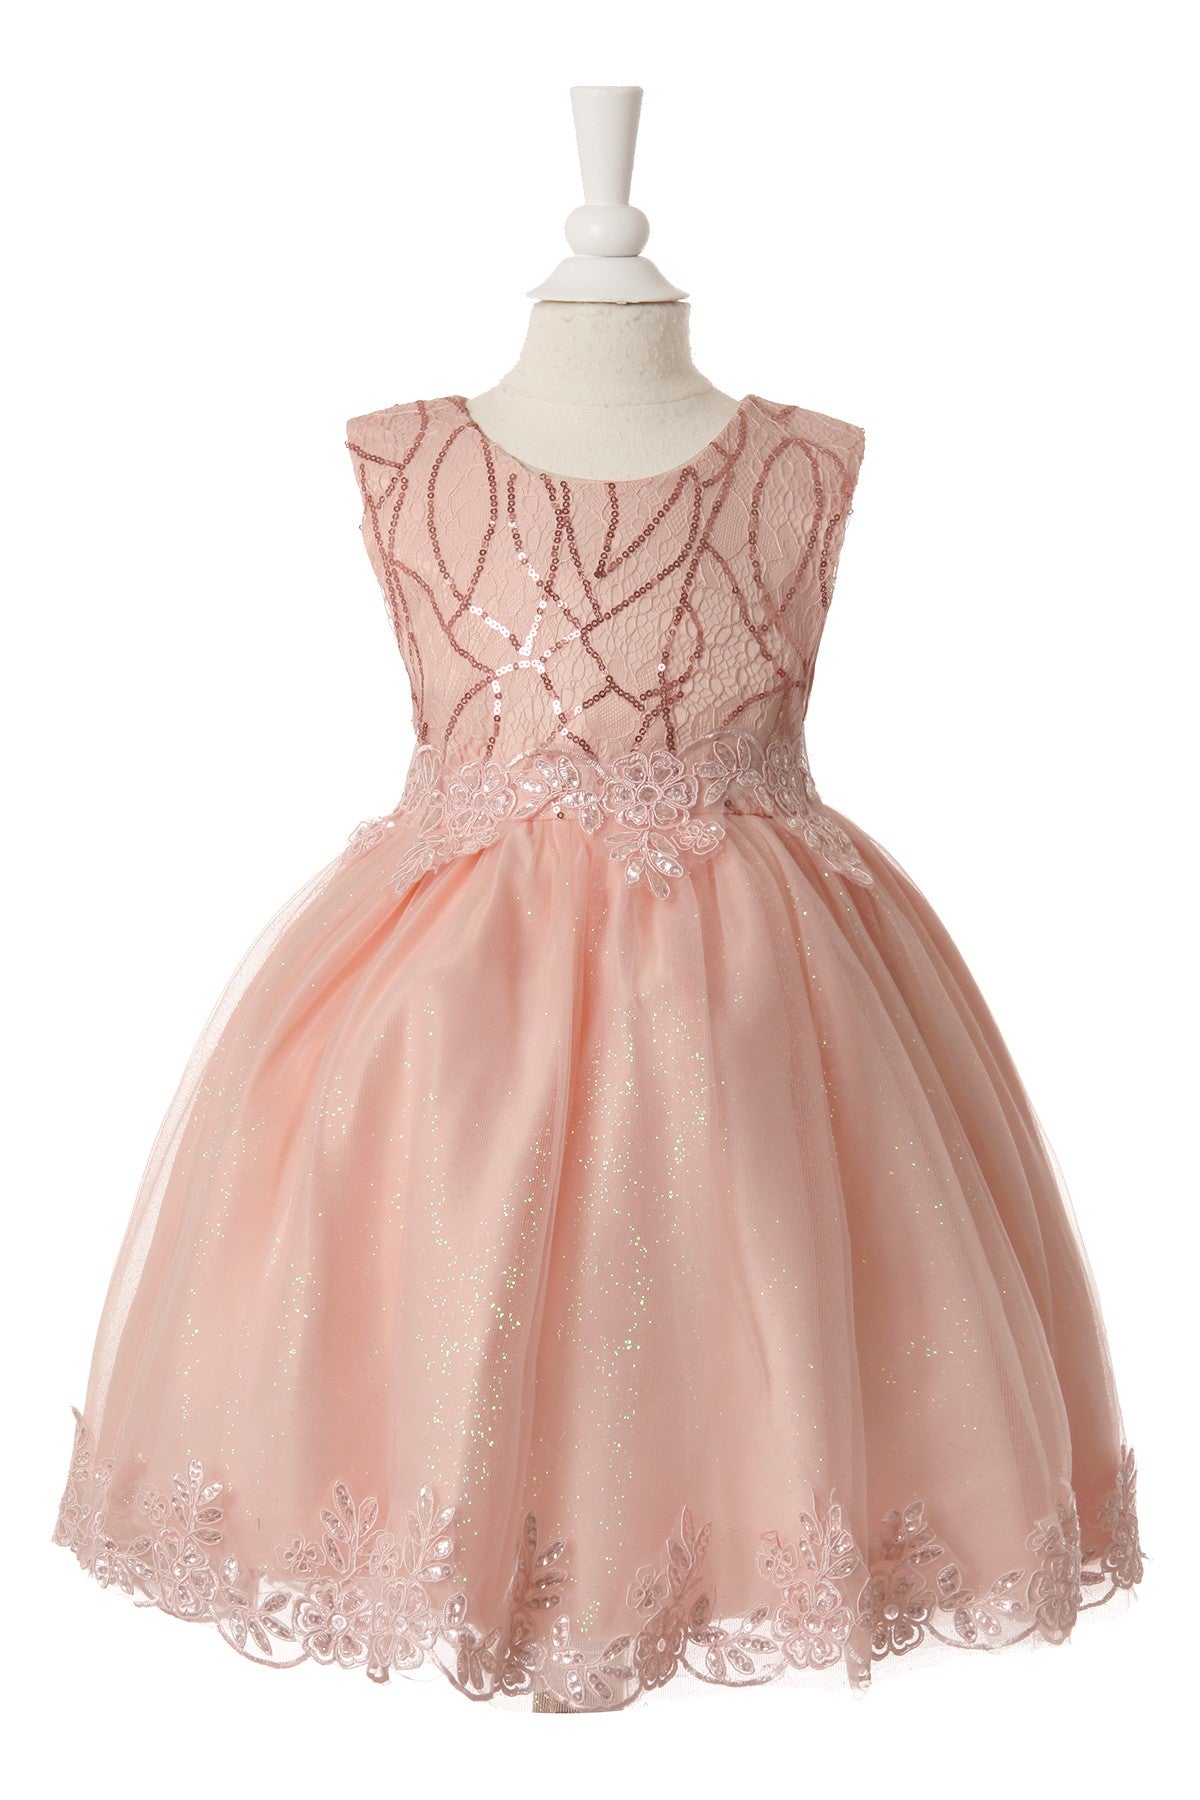 Sparkly Baby Dress 10006